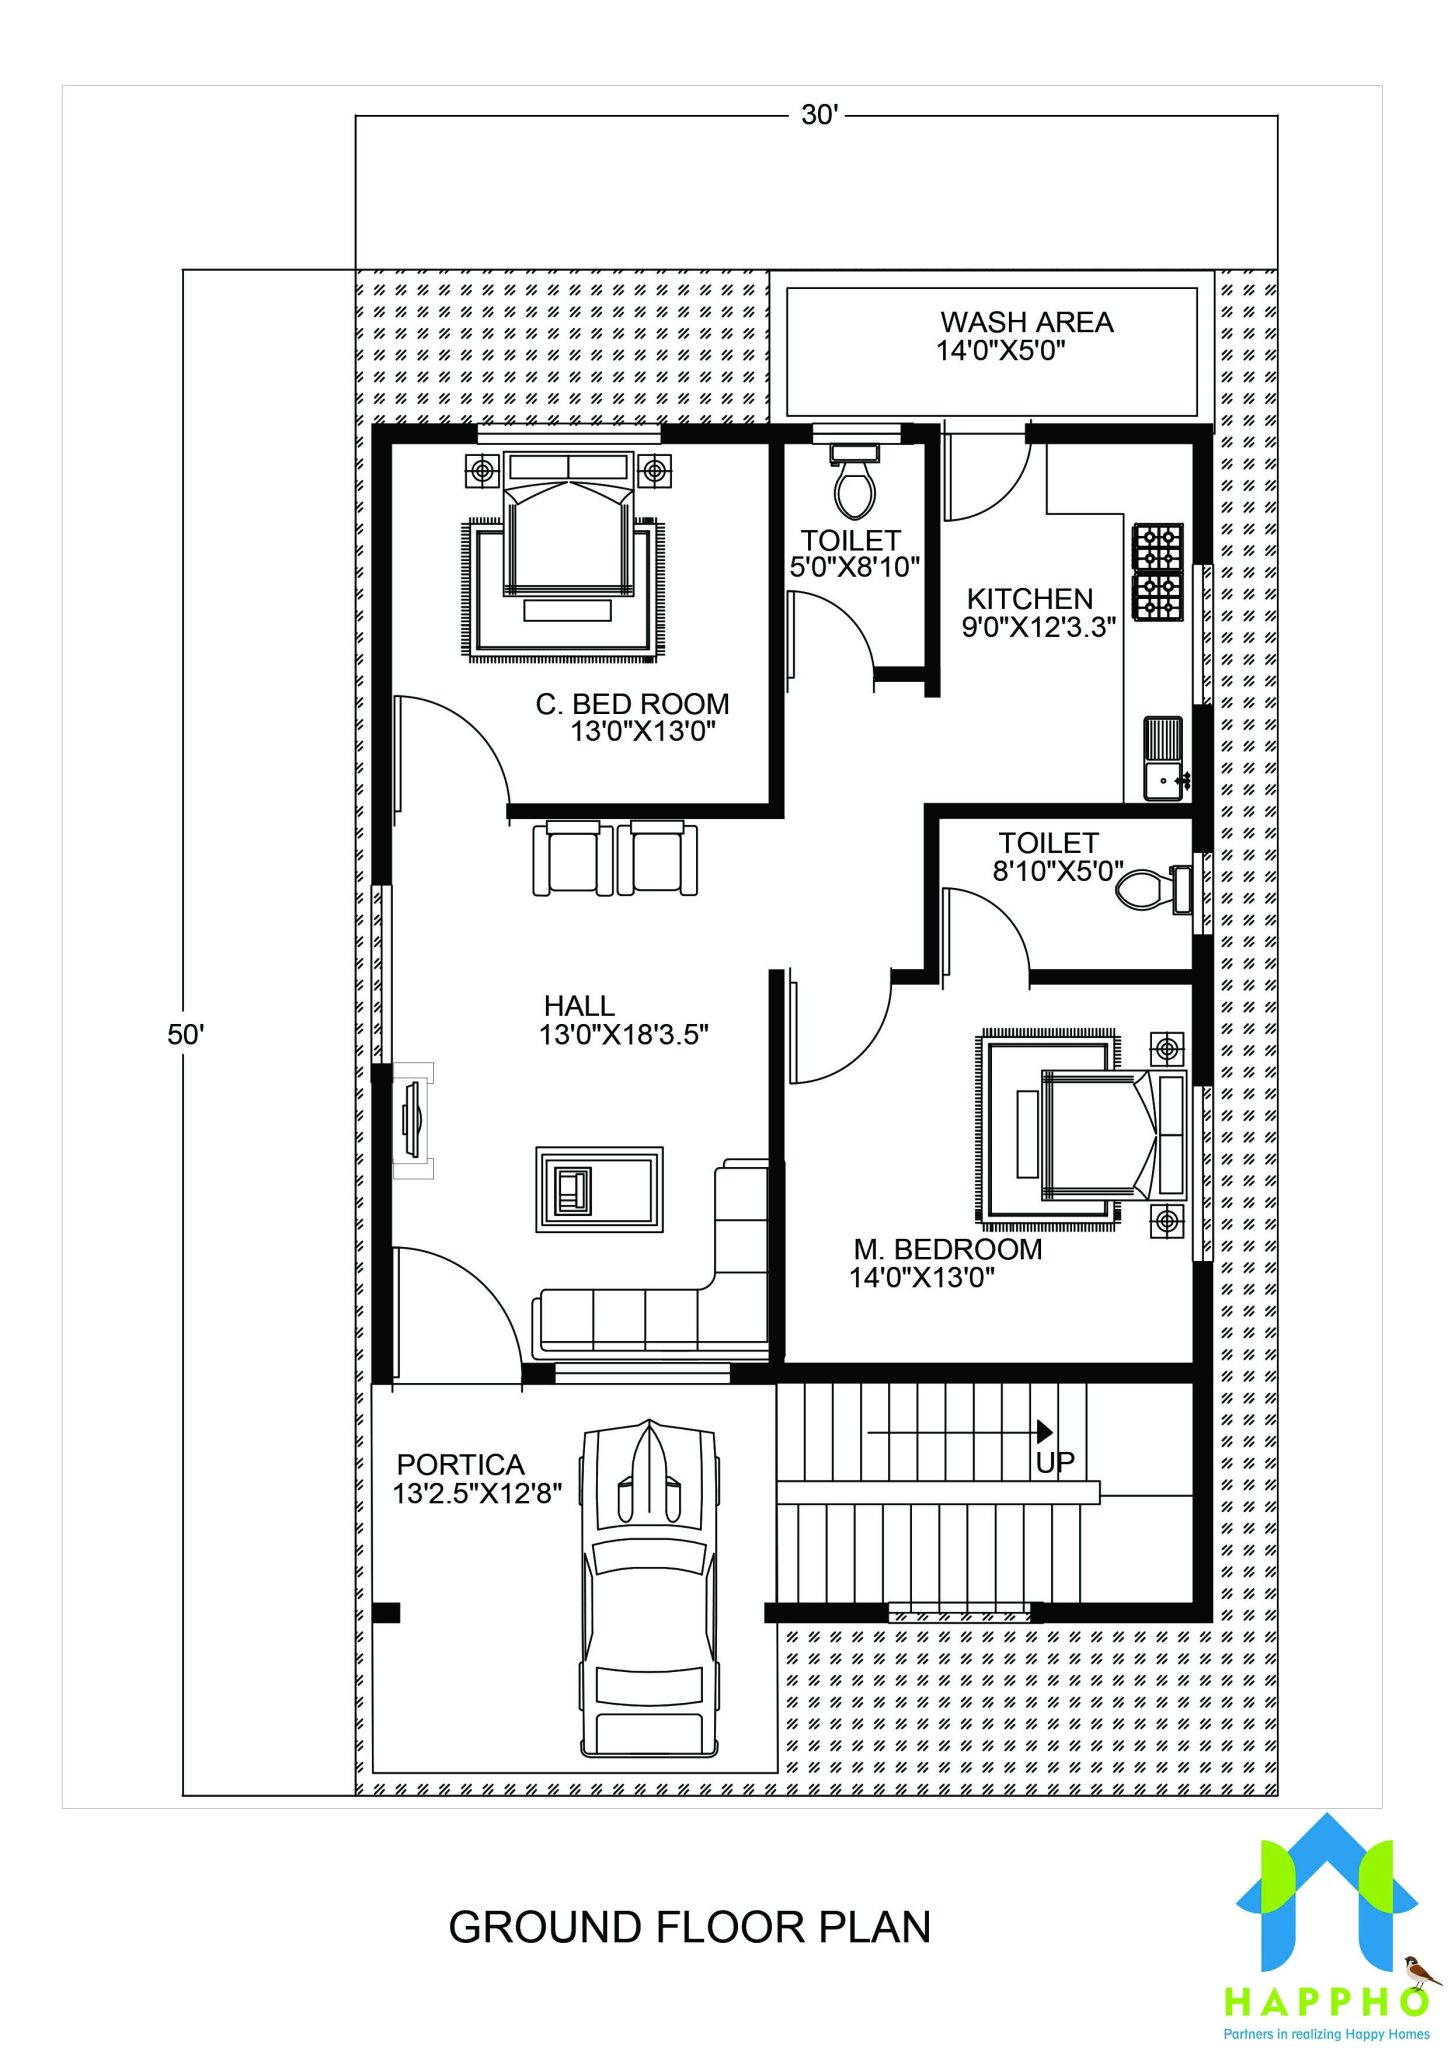 Floor Plan for 30 X 50 Feet plot 2BHK (1500 Square Feet/166 Square